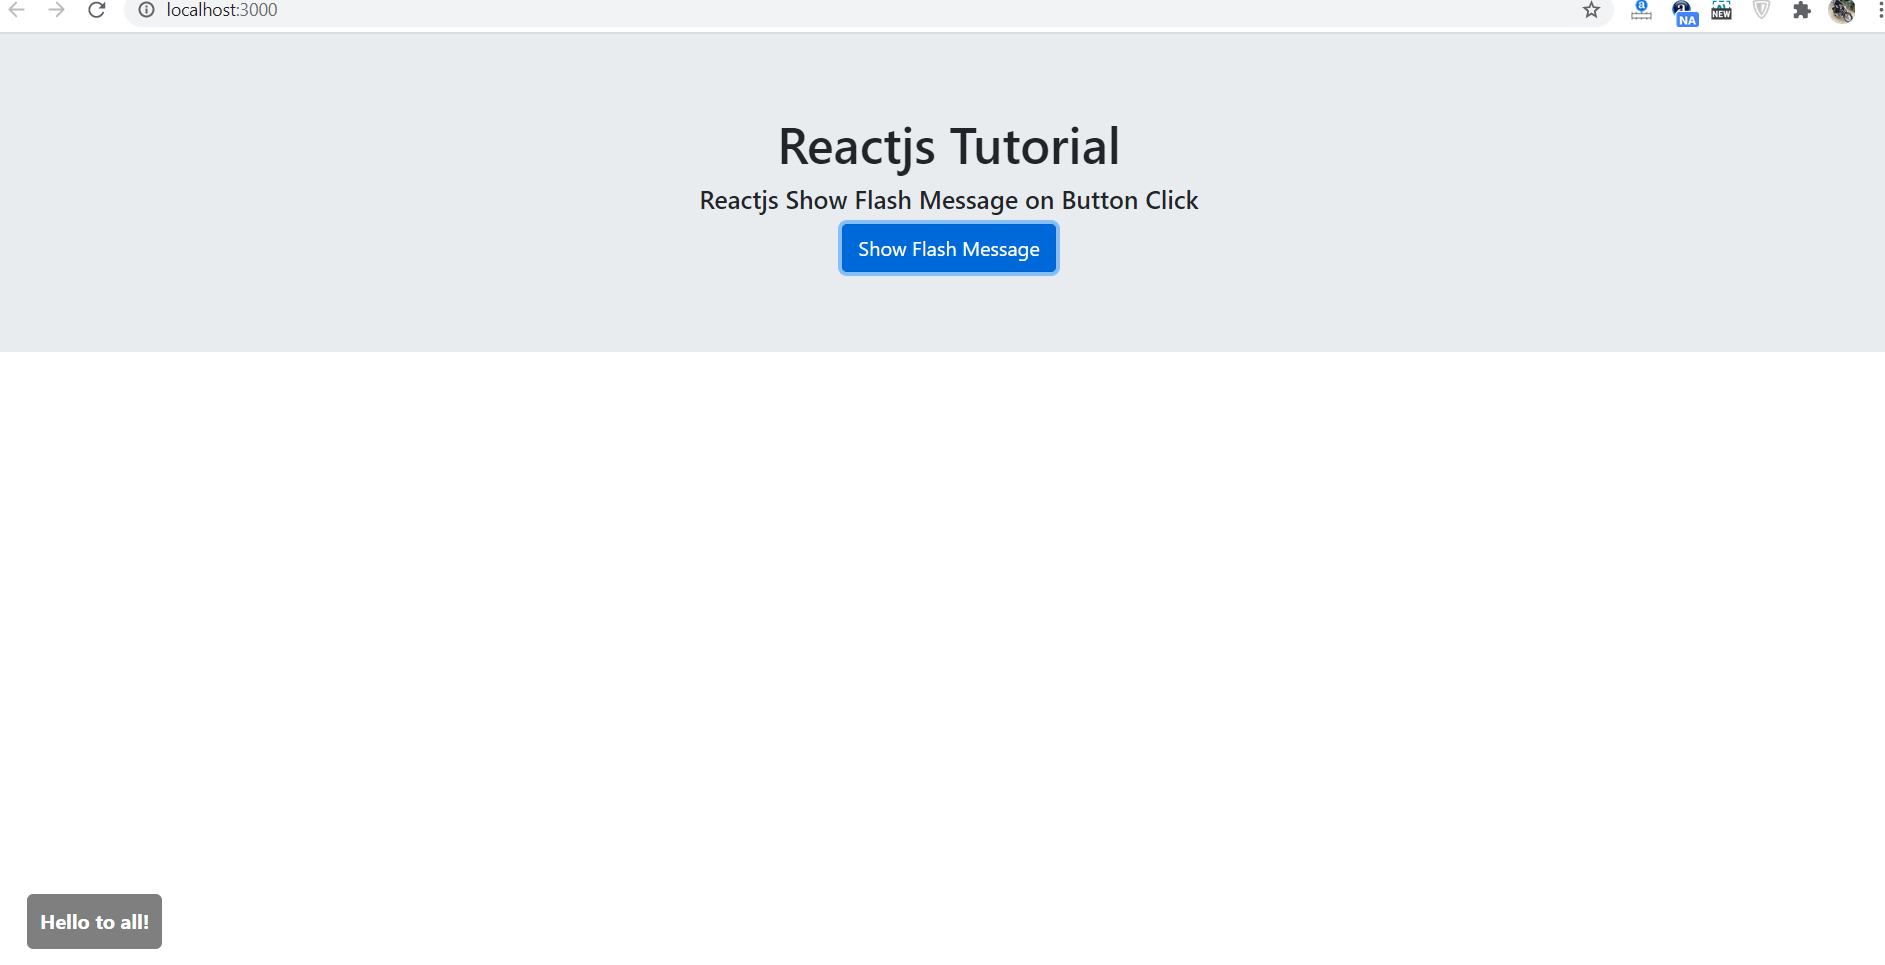 Reactjs Show Flash Message on Button Click